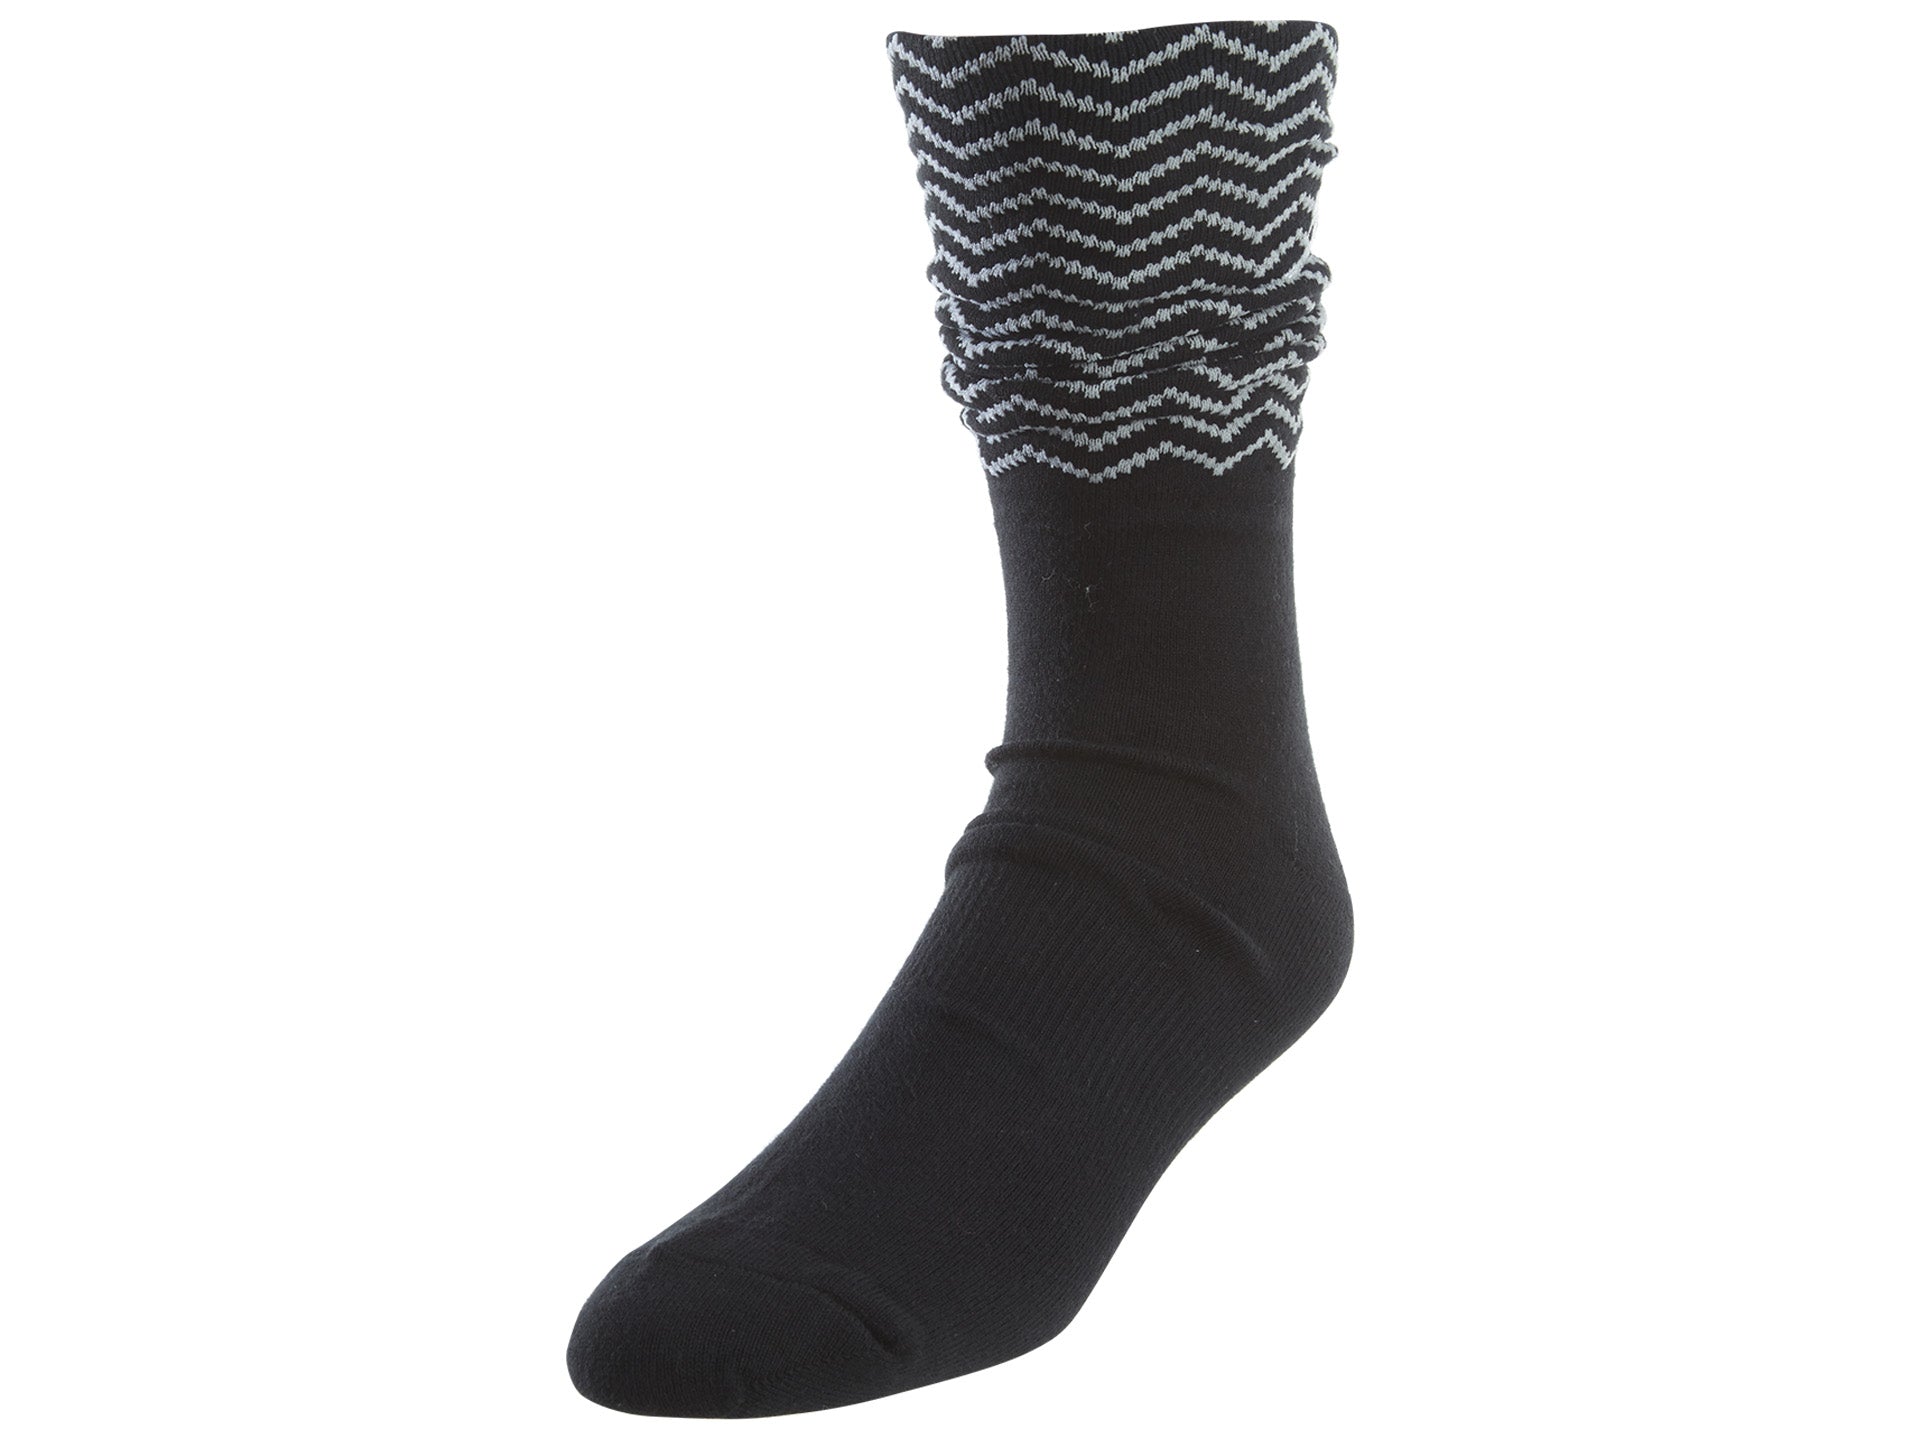 Jordan Retro 12 Crew Socks Mens Style : 724926